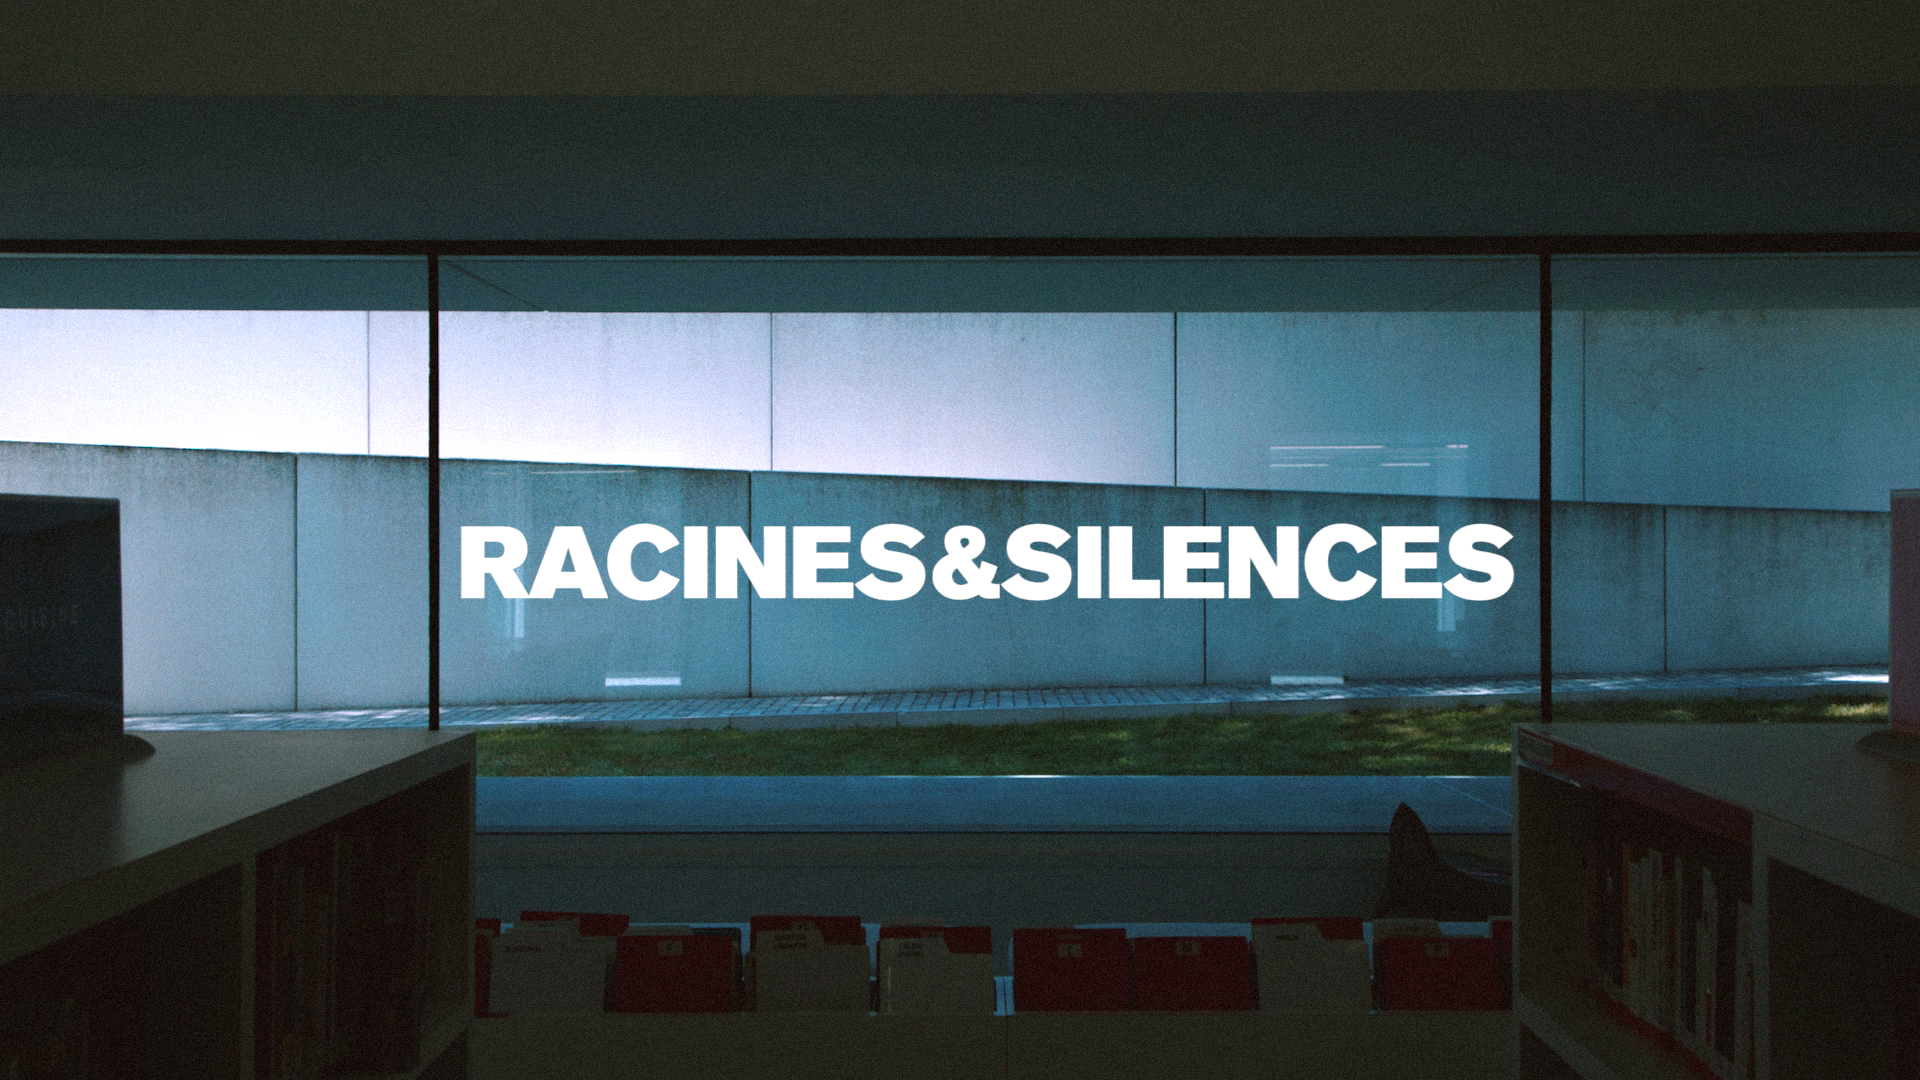 Racines & silence